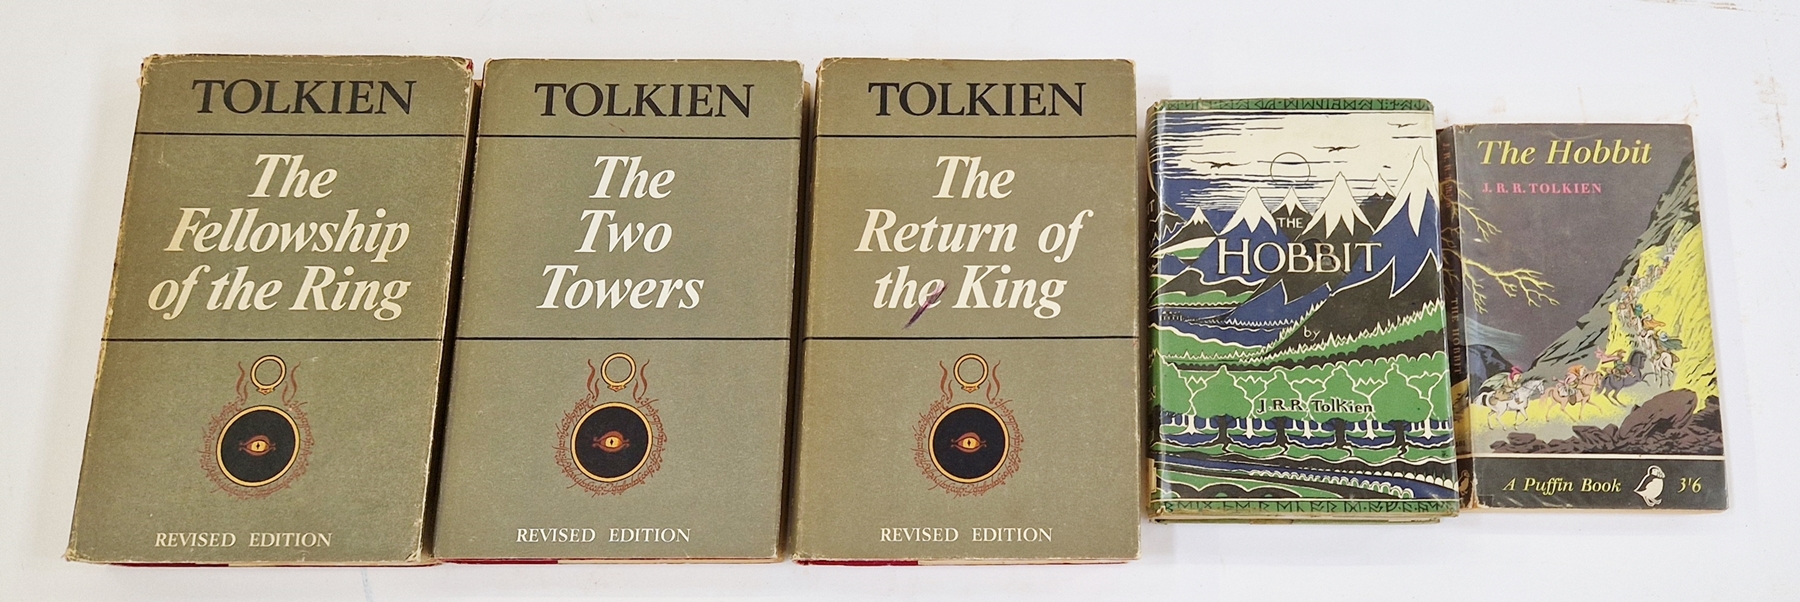 Tolkien, J. R. R. "The Hobbit" George Allen & Unwin Ltd. Twelfth Impression 1961, ills. by the - Image 2 of 9